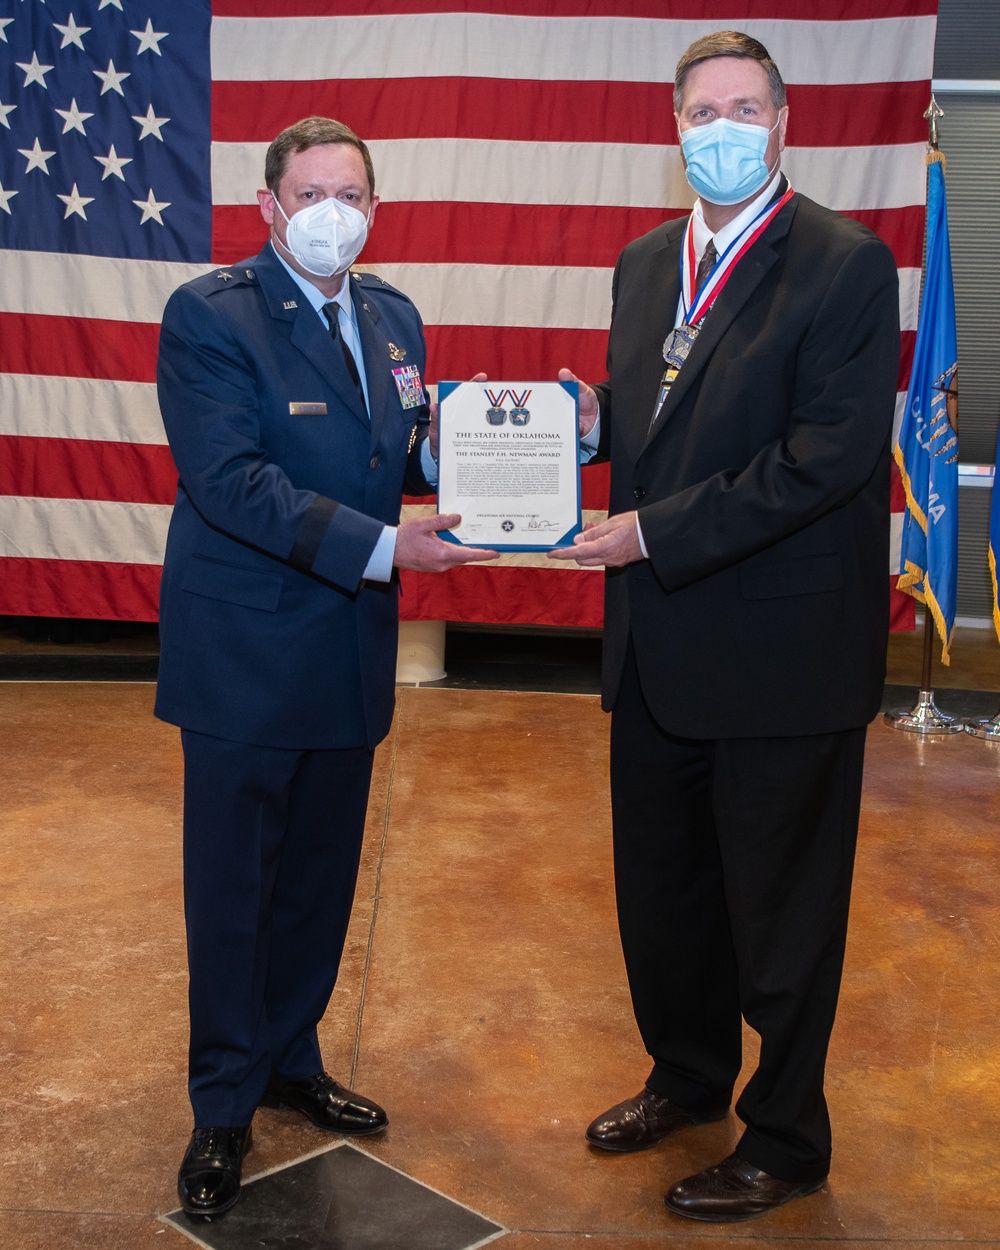 City of Tulsa civilians receive the Maj. Gen. Stanley F.H. Newman Award